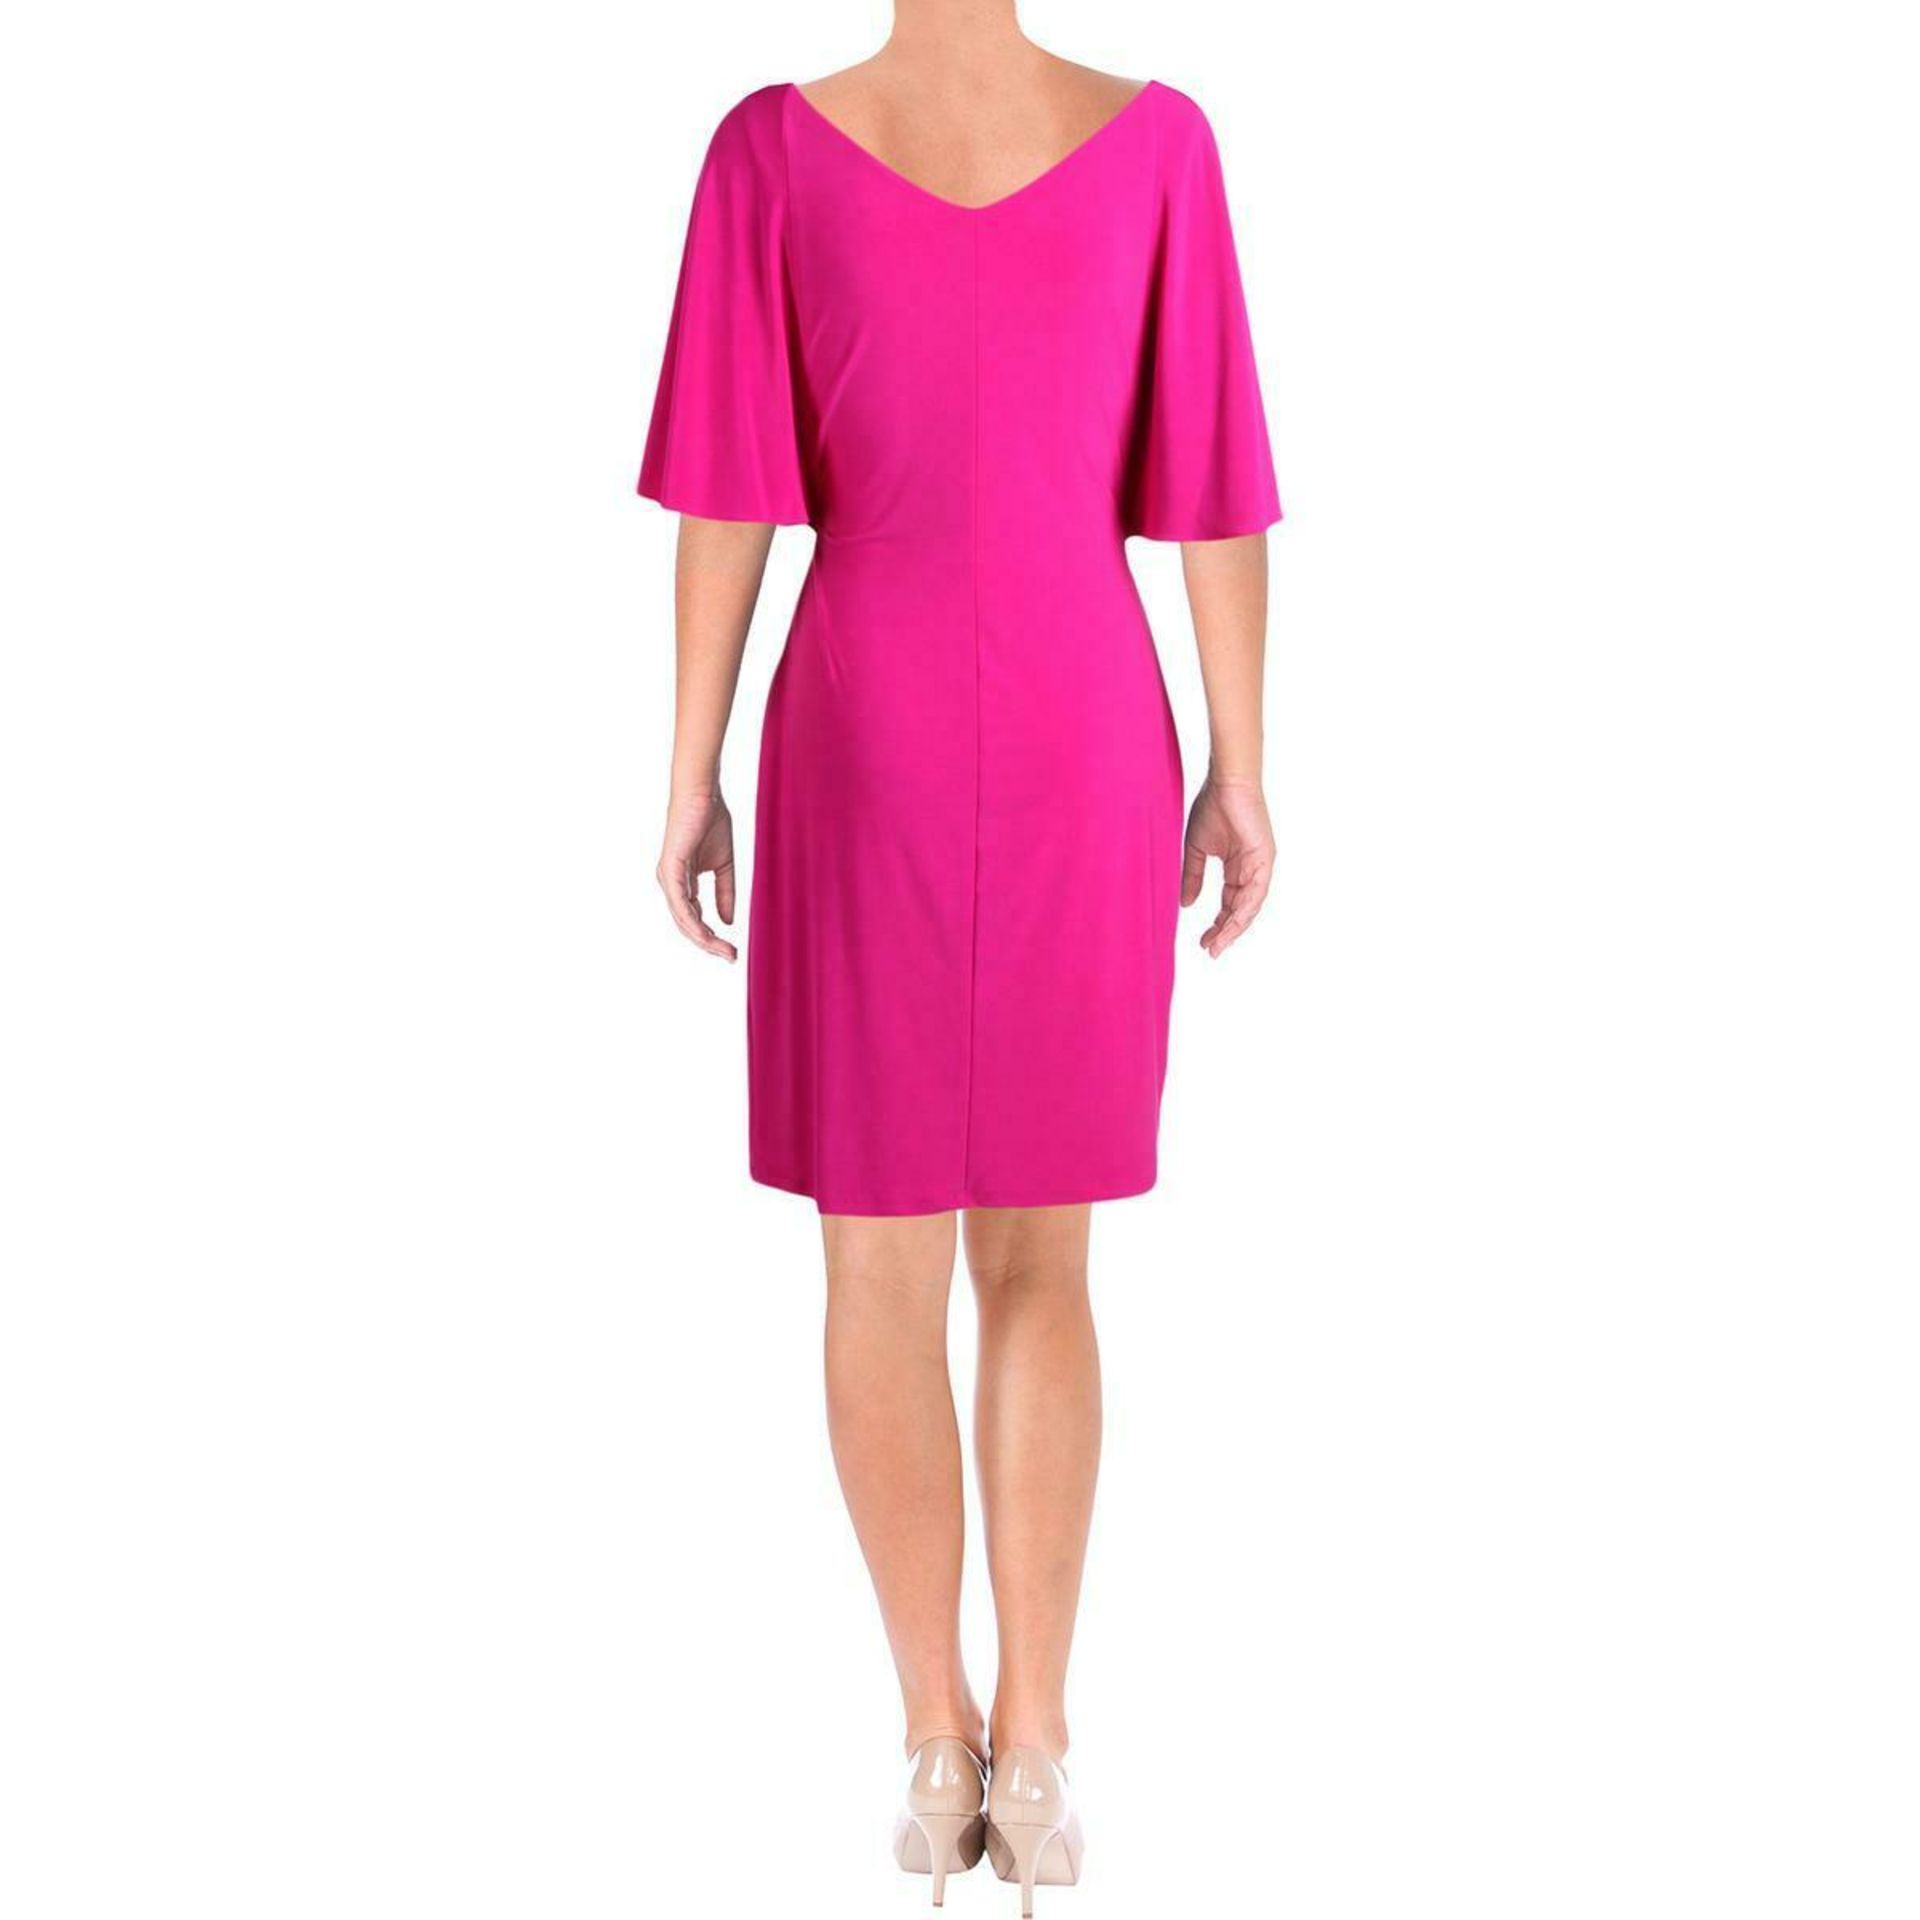 Lauren Ralph Lauren Womens Jessup Jersey Short Sleeves Cocktail Dress. Colour Paradise Pink Size 16 - Image 2 of 2